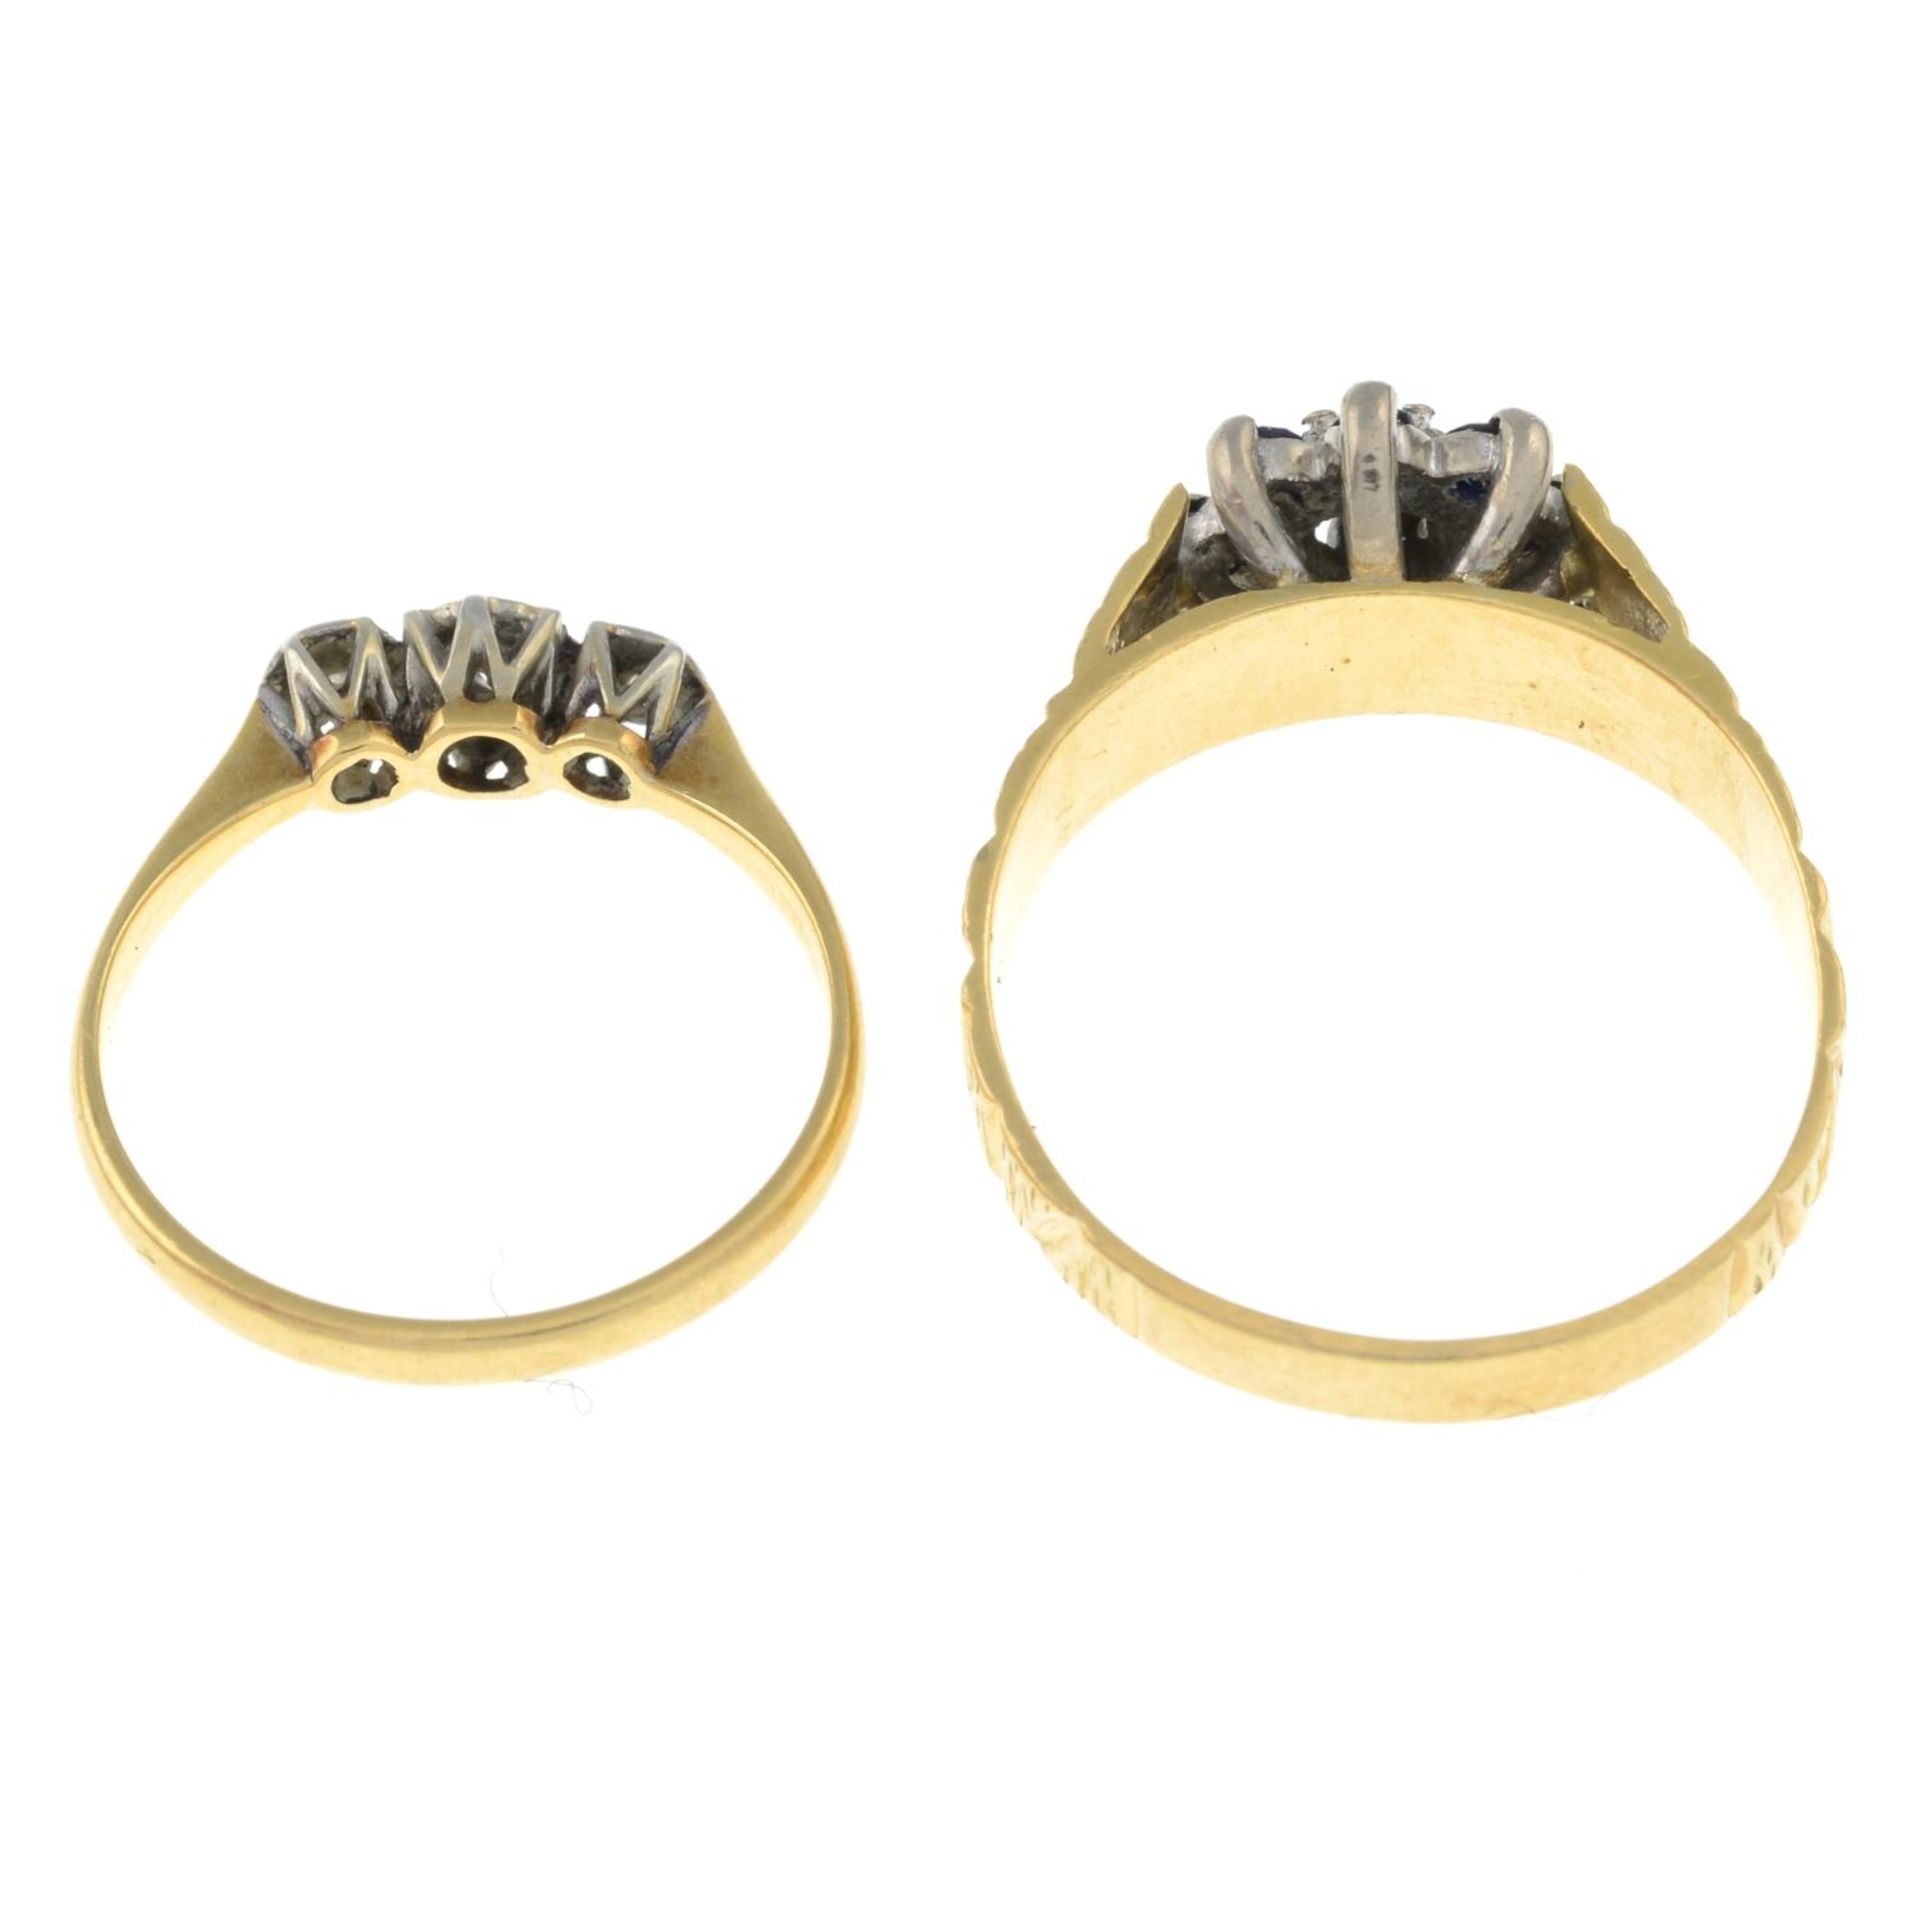 Illusion-set single-cut diamond three-stone ring, stamped 18ct&Plat, ring size K, 1.7gms. - Image 3 of 3